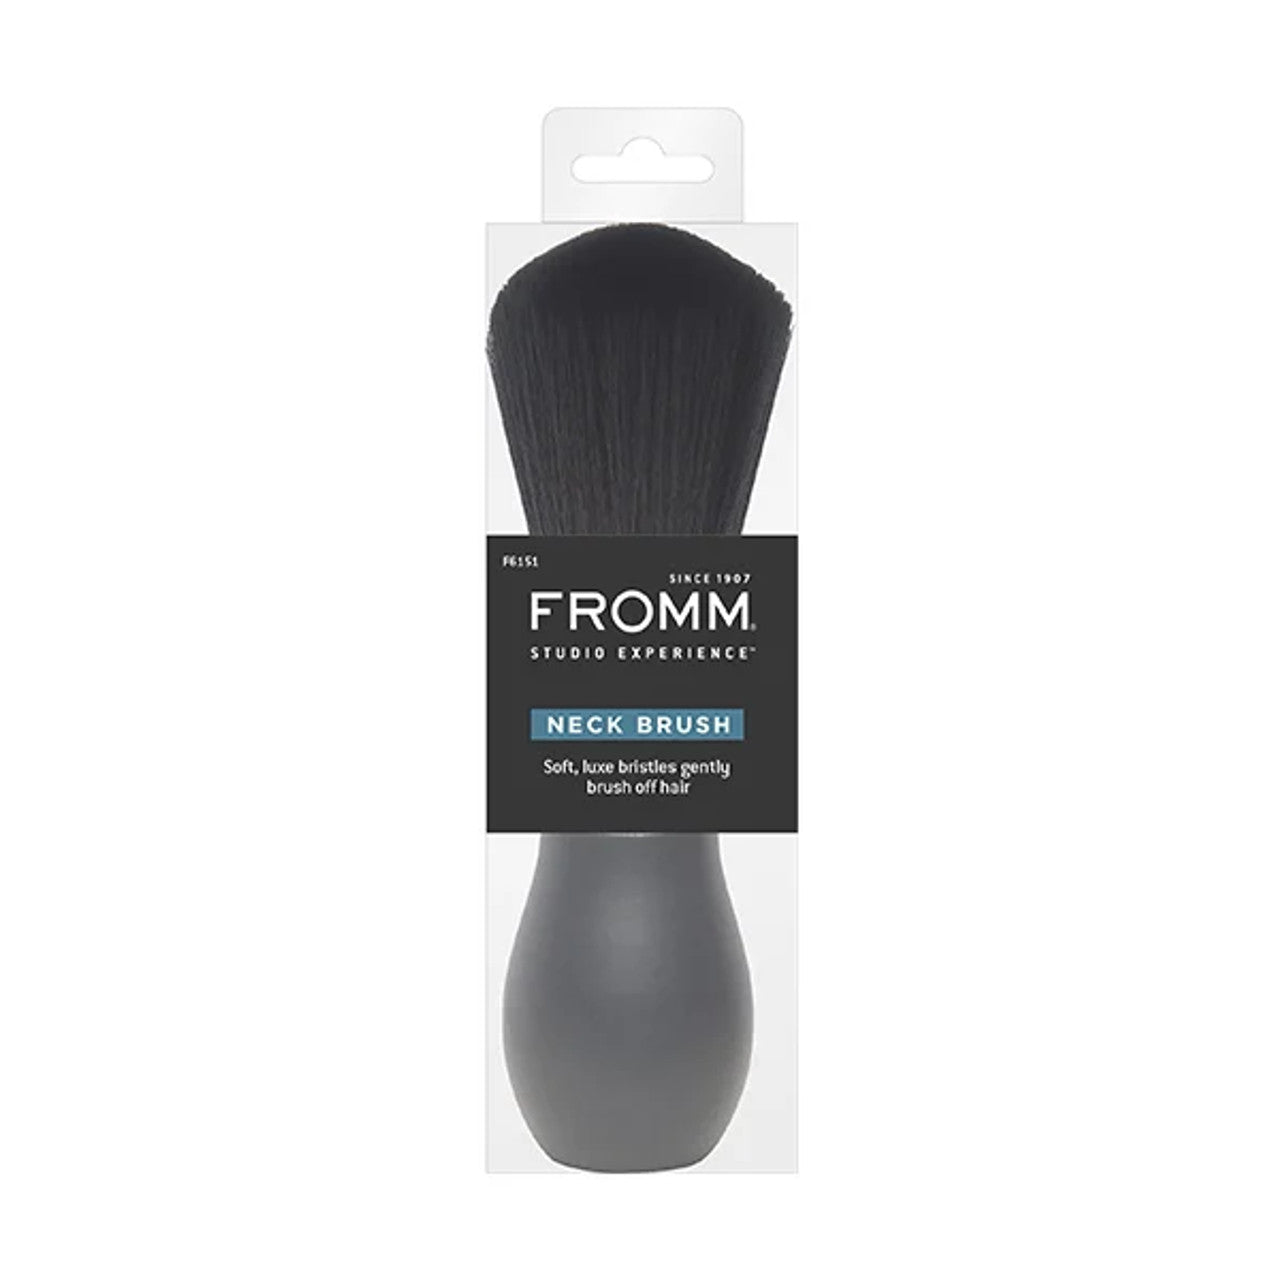 Fromm Studio Experience Neck Brush - Black